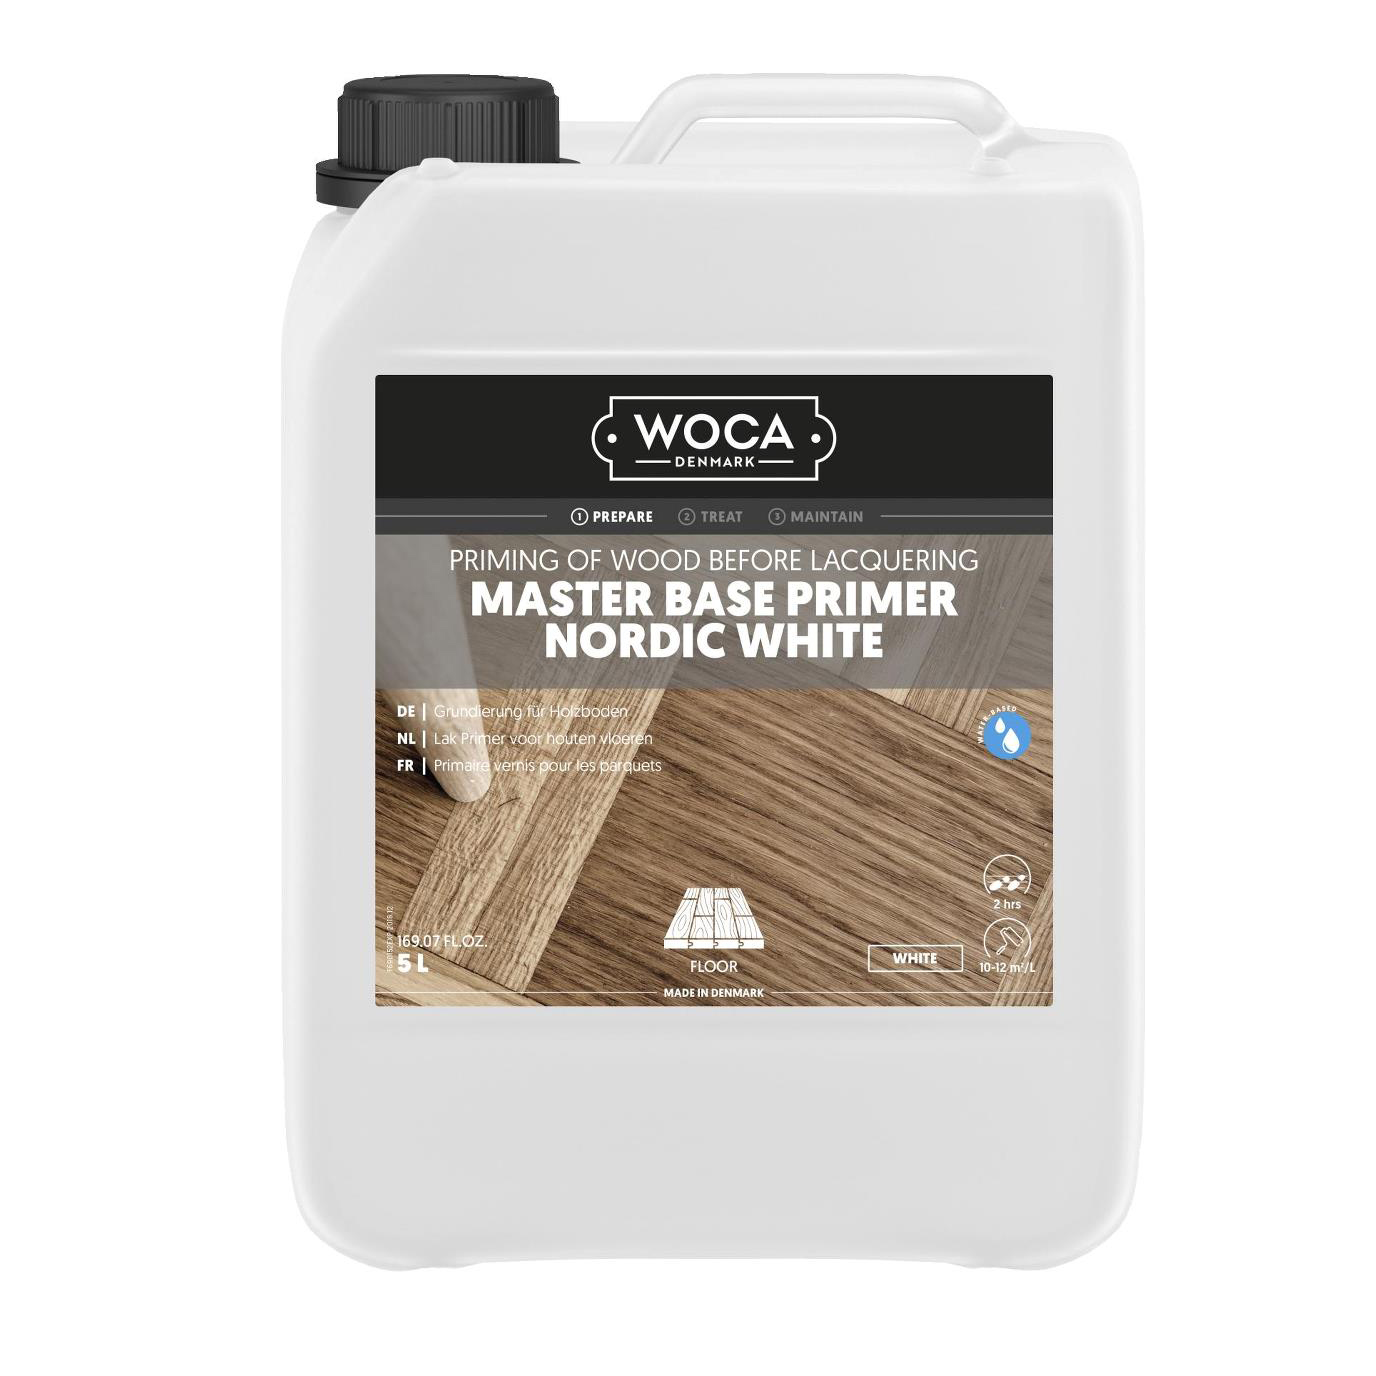 WOCA Master Base Primer Nordic White